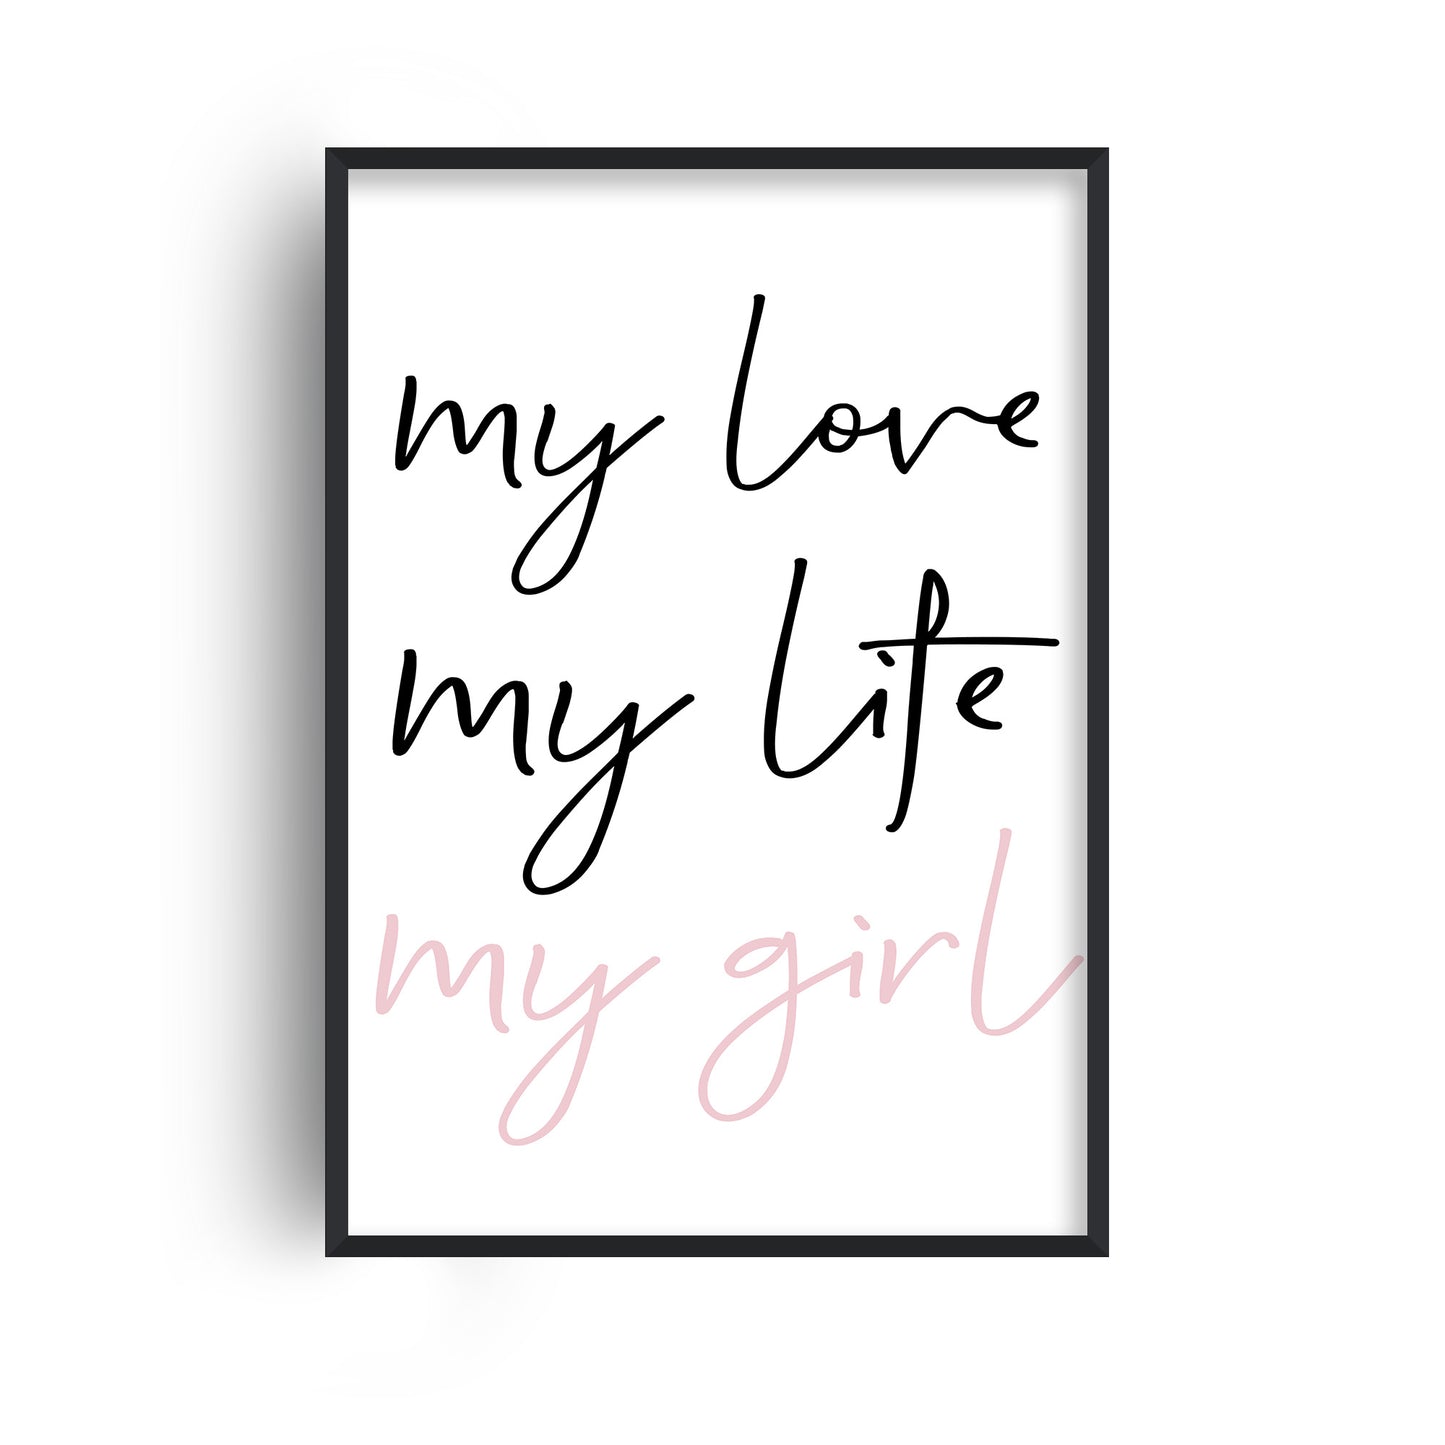 My Love My Girl Print